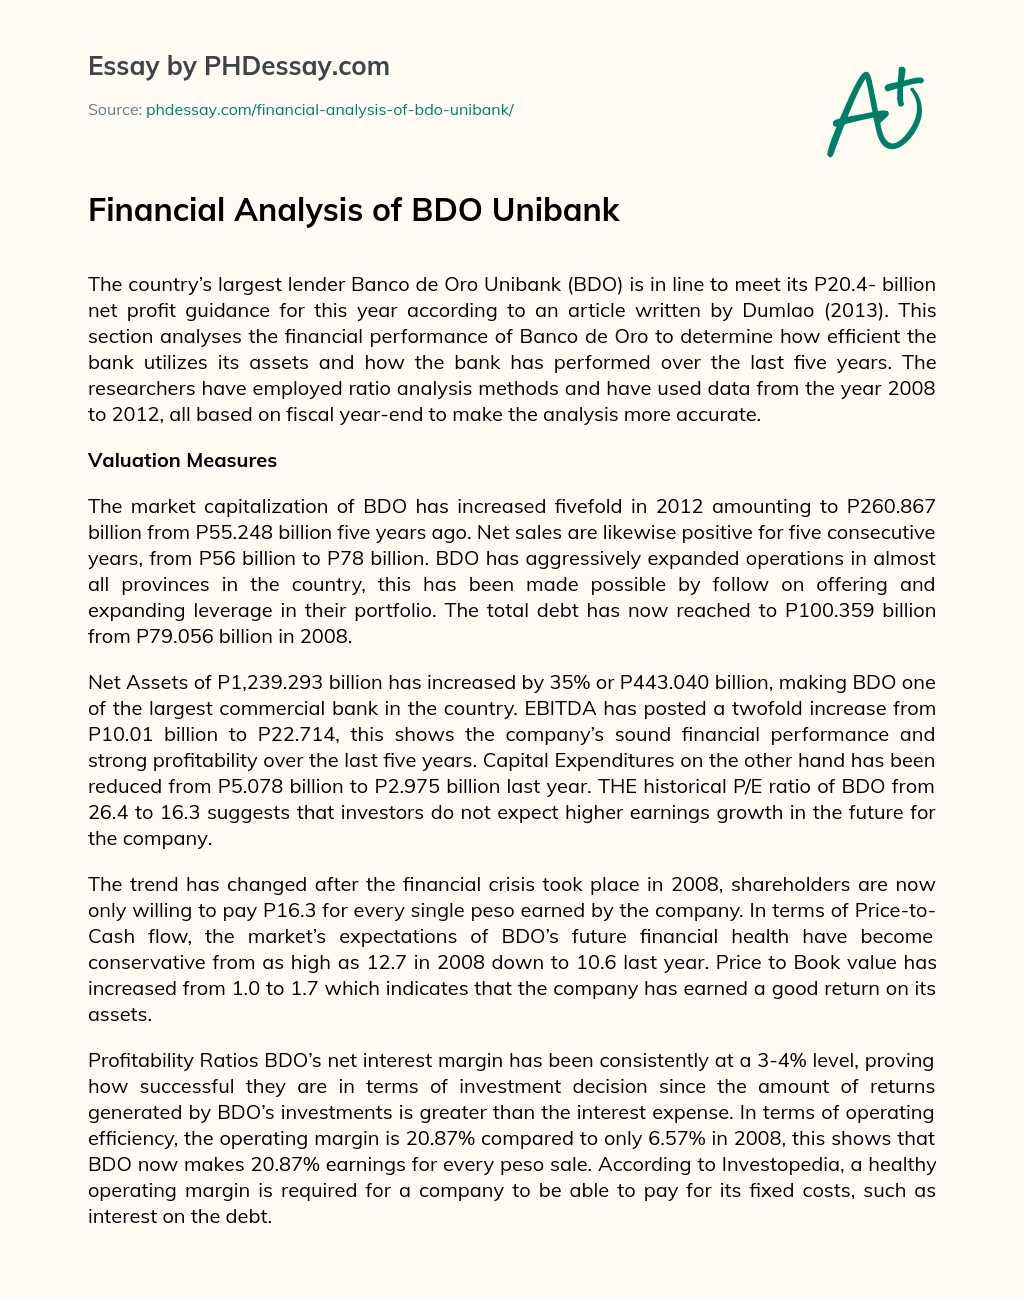 Financial Analysis of BDO Unibank essay